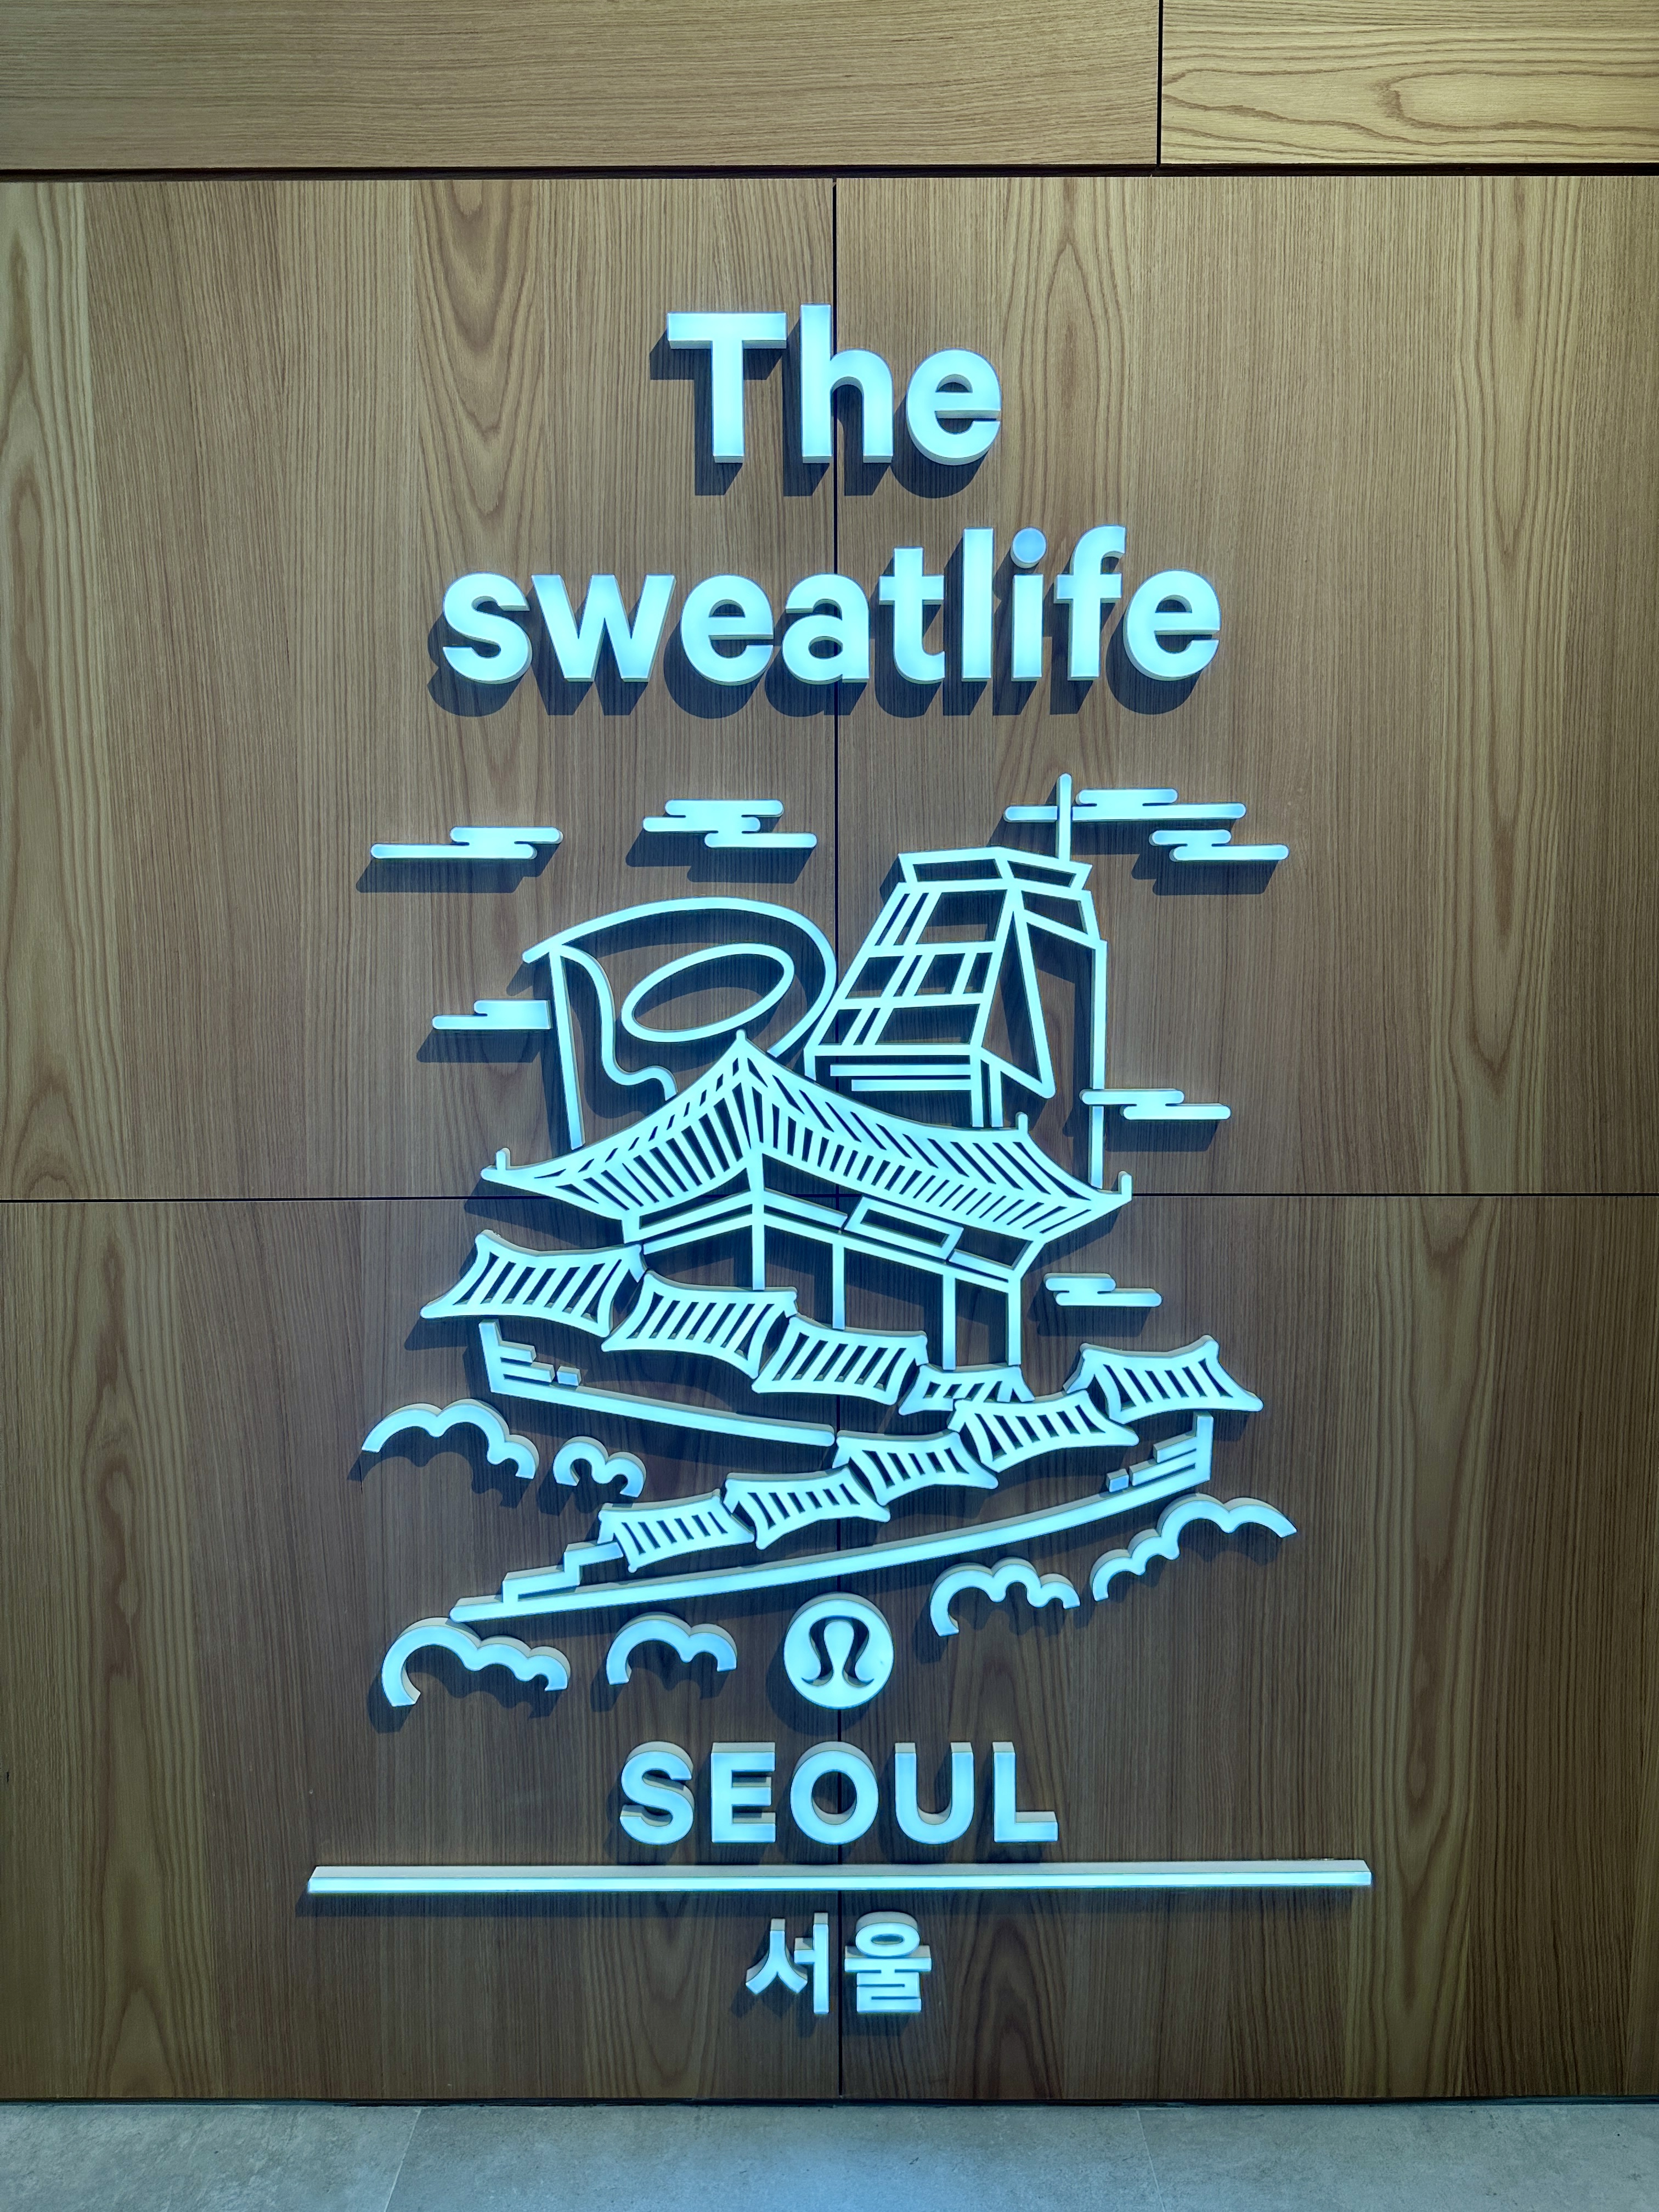 The sweatlife seoul